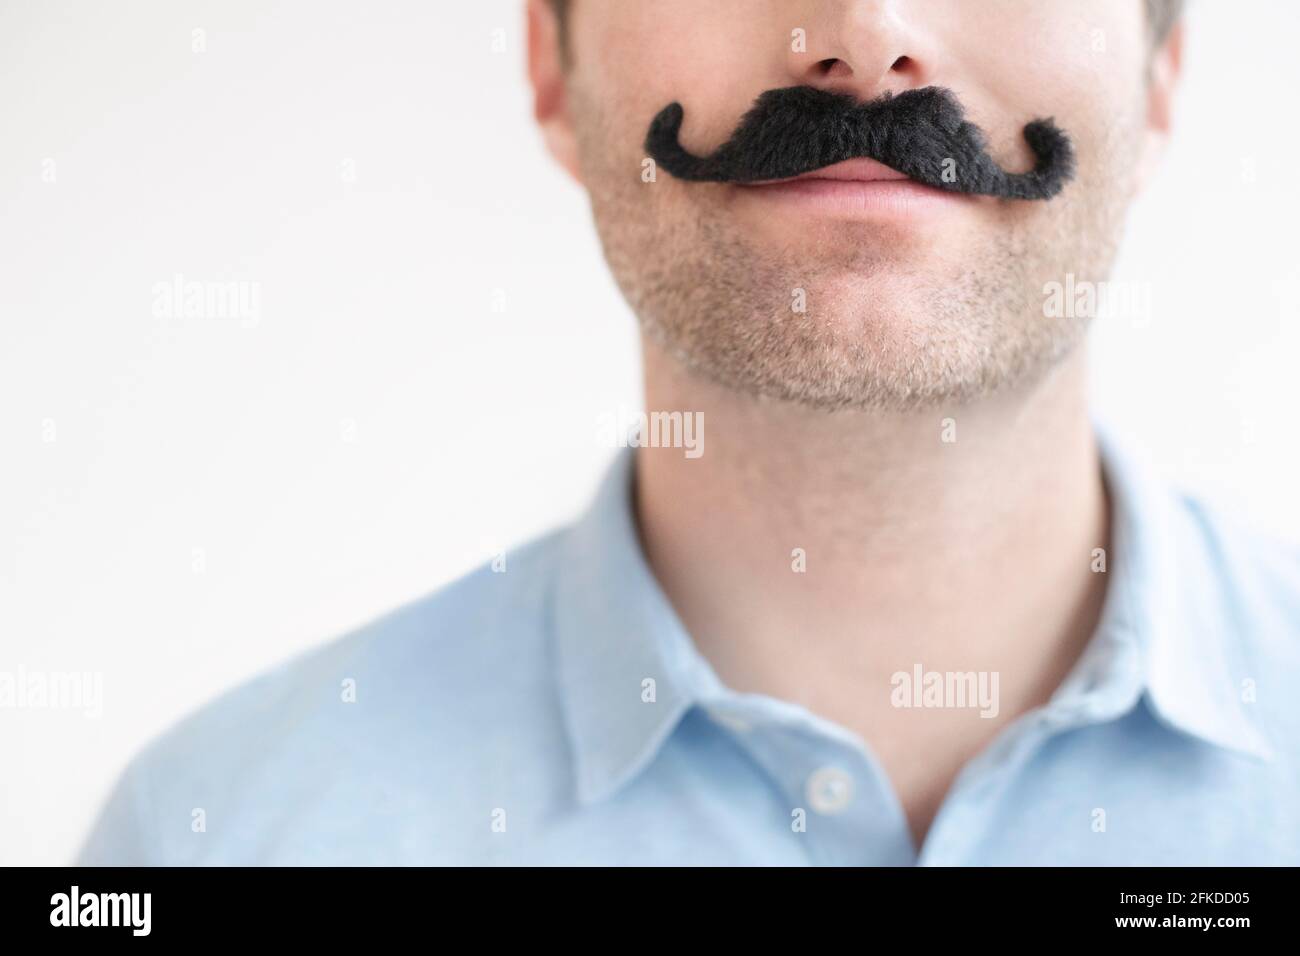 Man with fake moustache Stock Photo